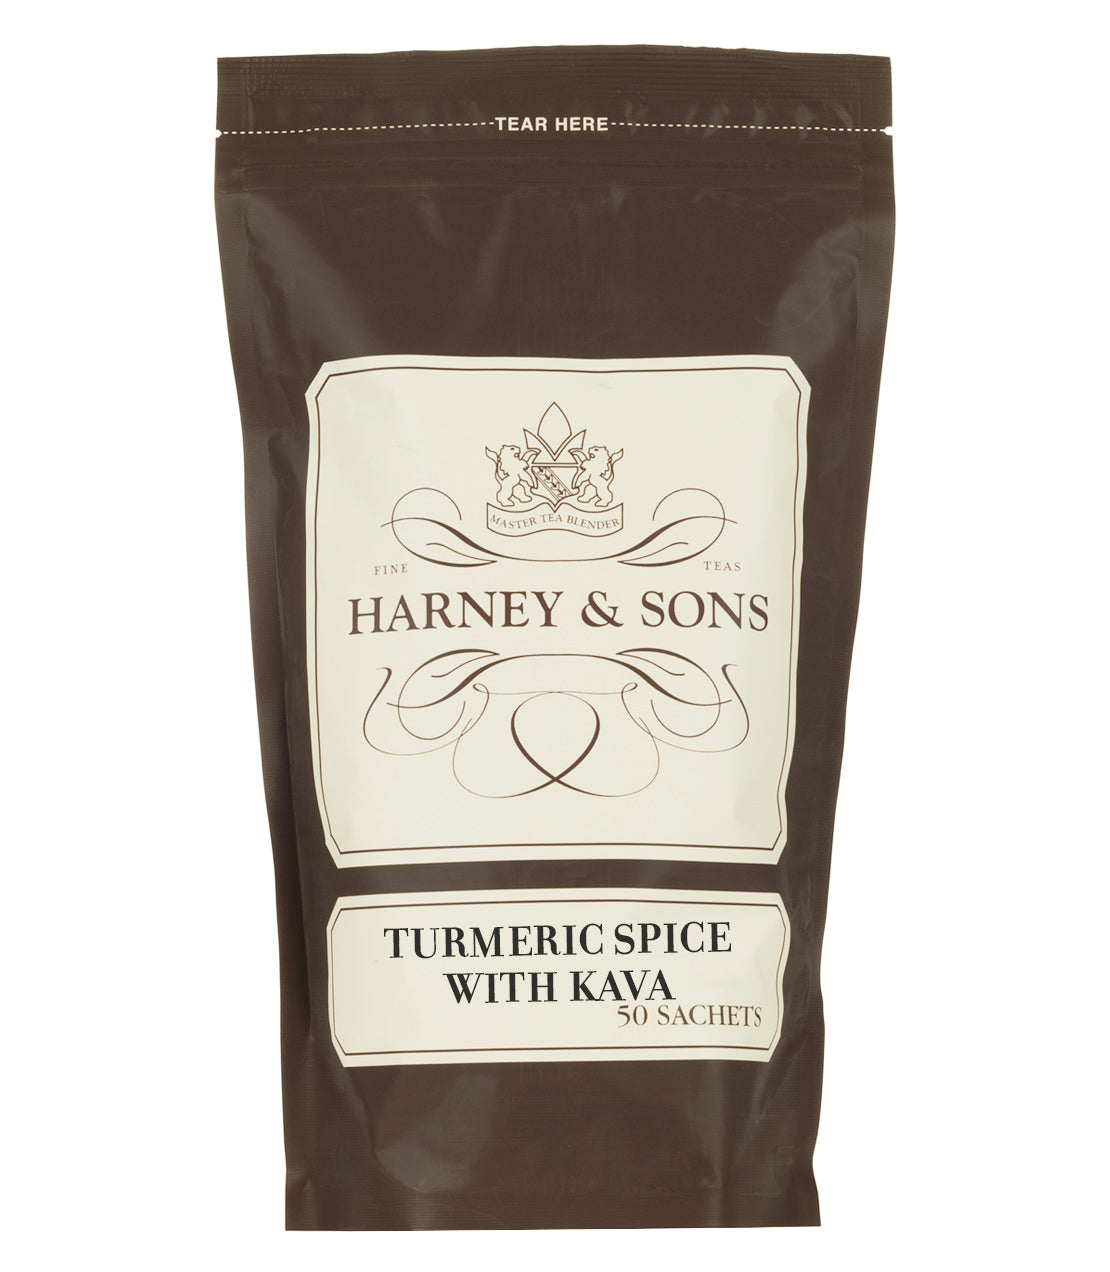 Turmeric Spice with Kava, Bag of 50 Sachets - Sachets Bag of 50 Sachets - Harney & Sons Fine Teas